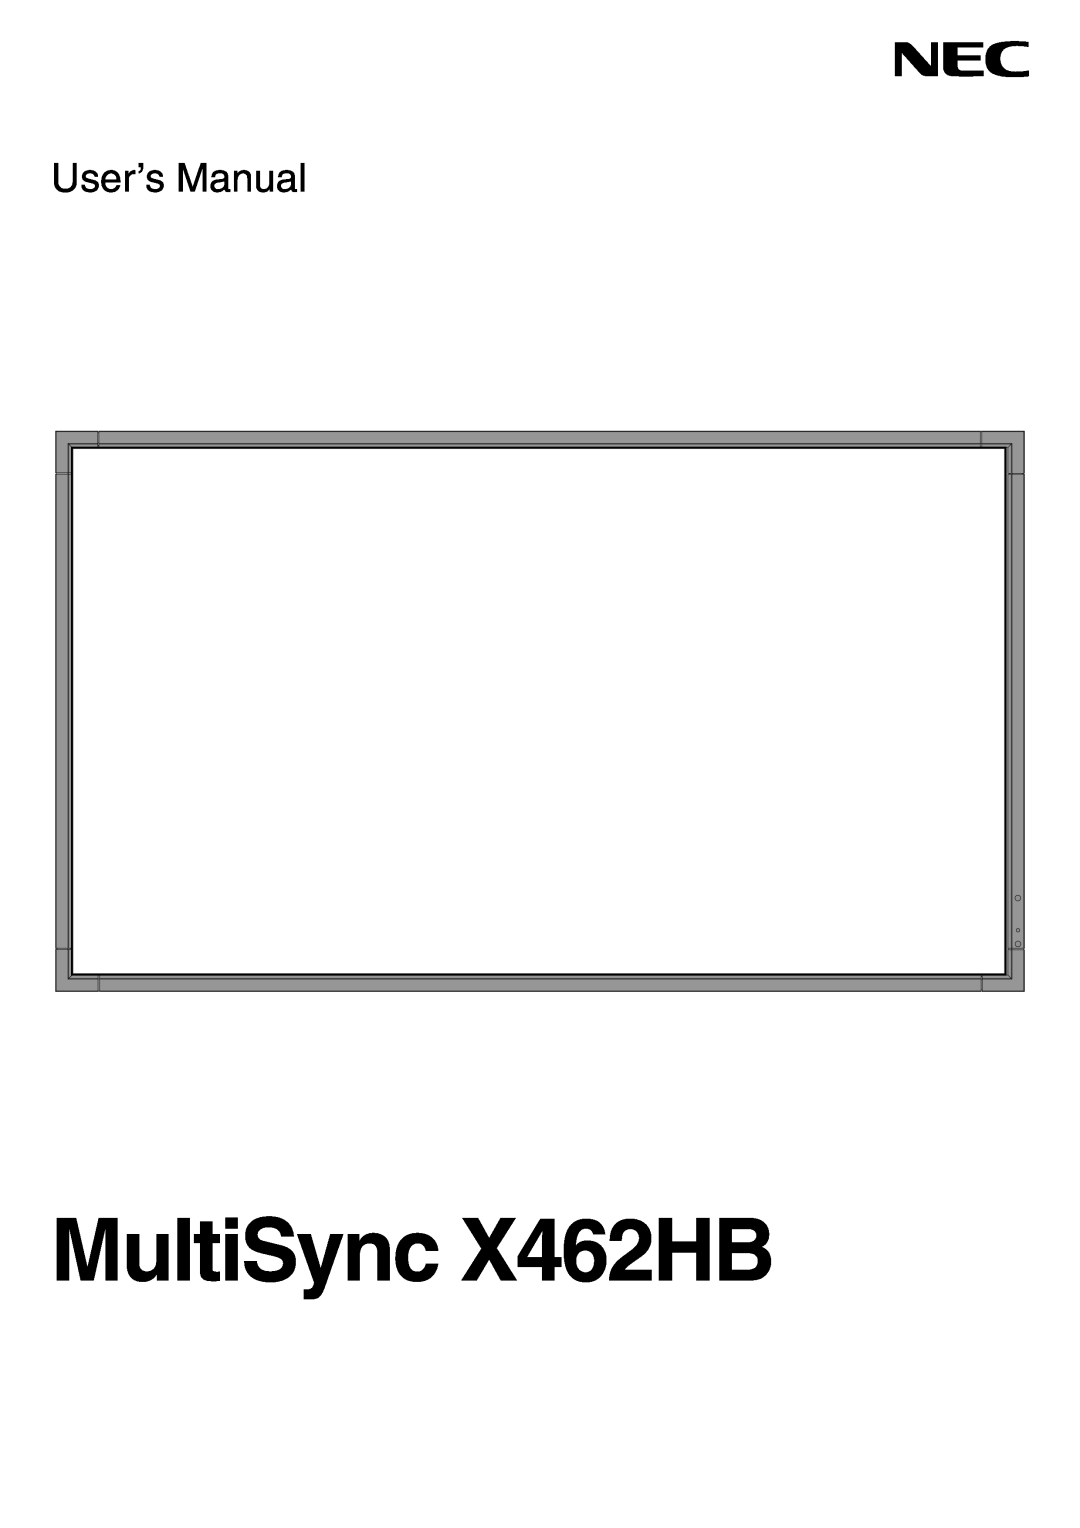 NEC MULTISYNC X462HB user manual MultiSync X462HB, User’s Manual 